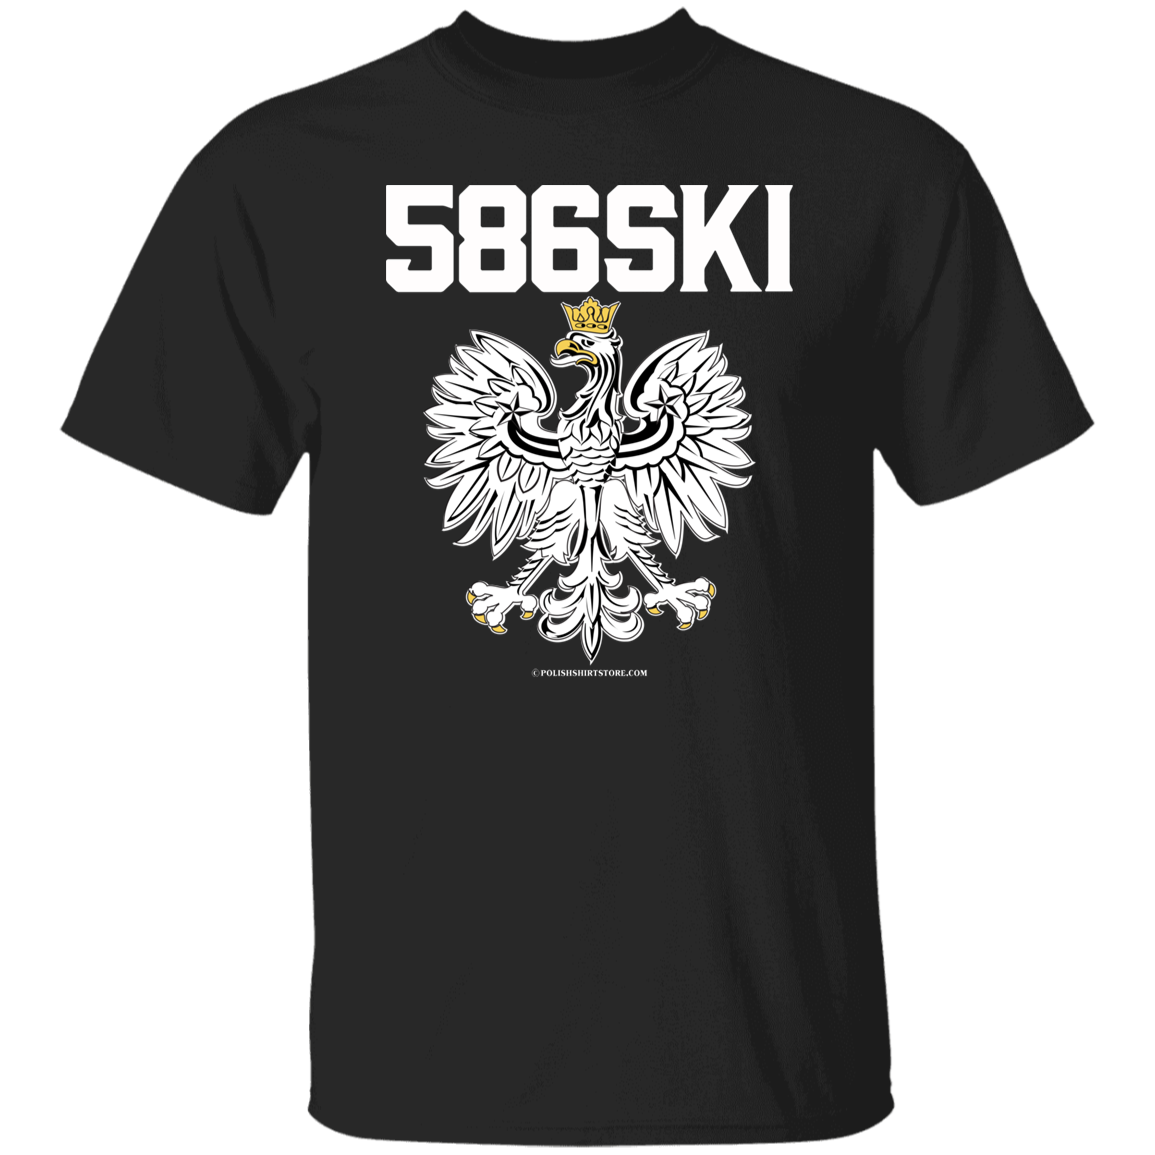 586SKI Apparel CustomCat G500 5.3 oz. T-Shirt Black S